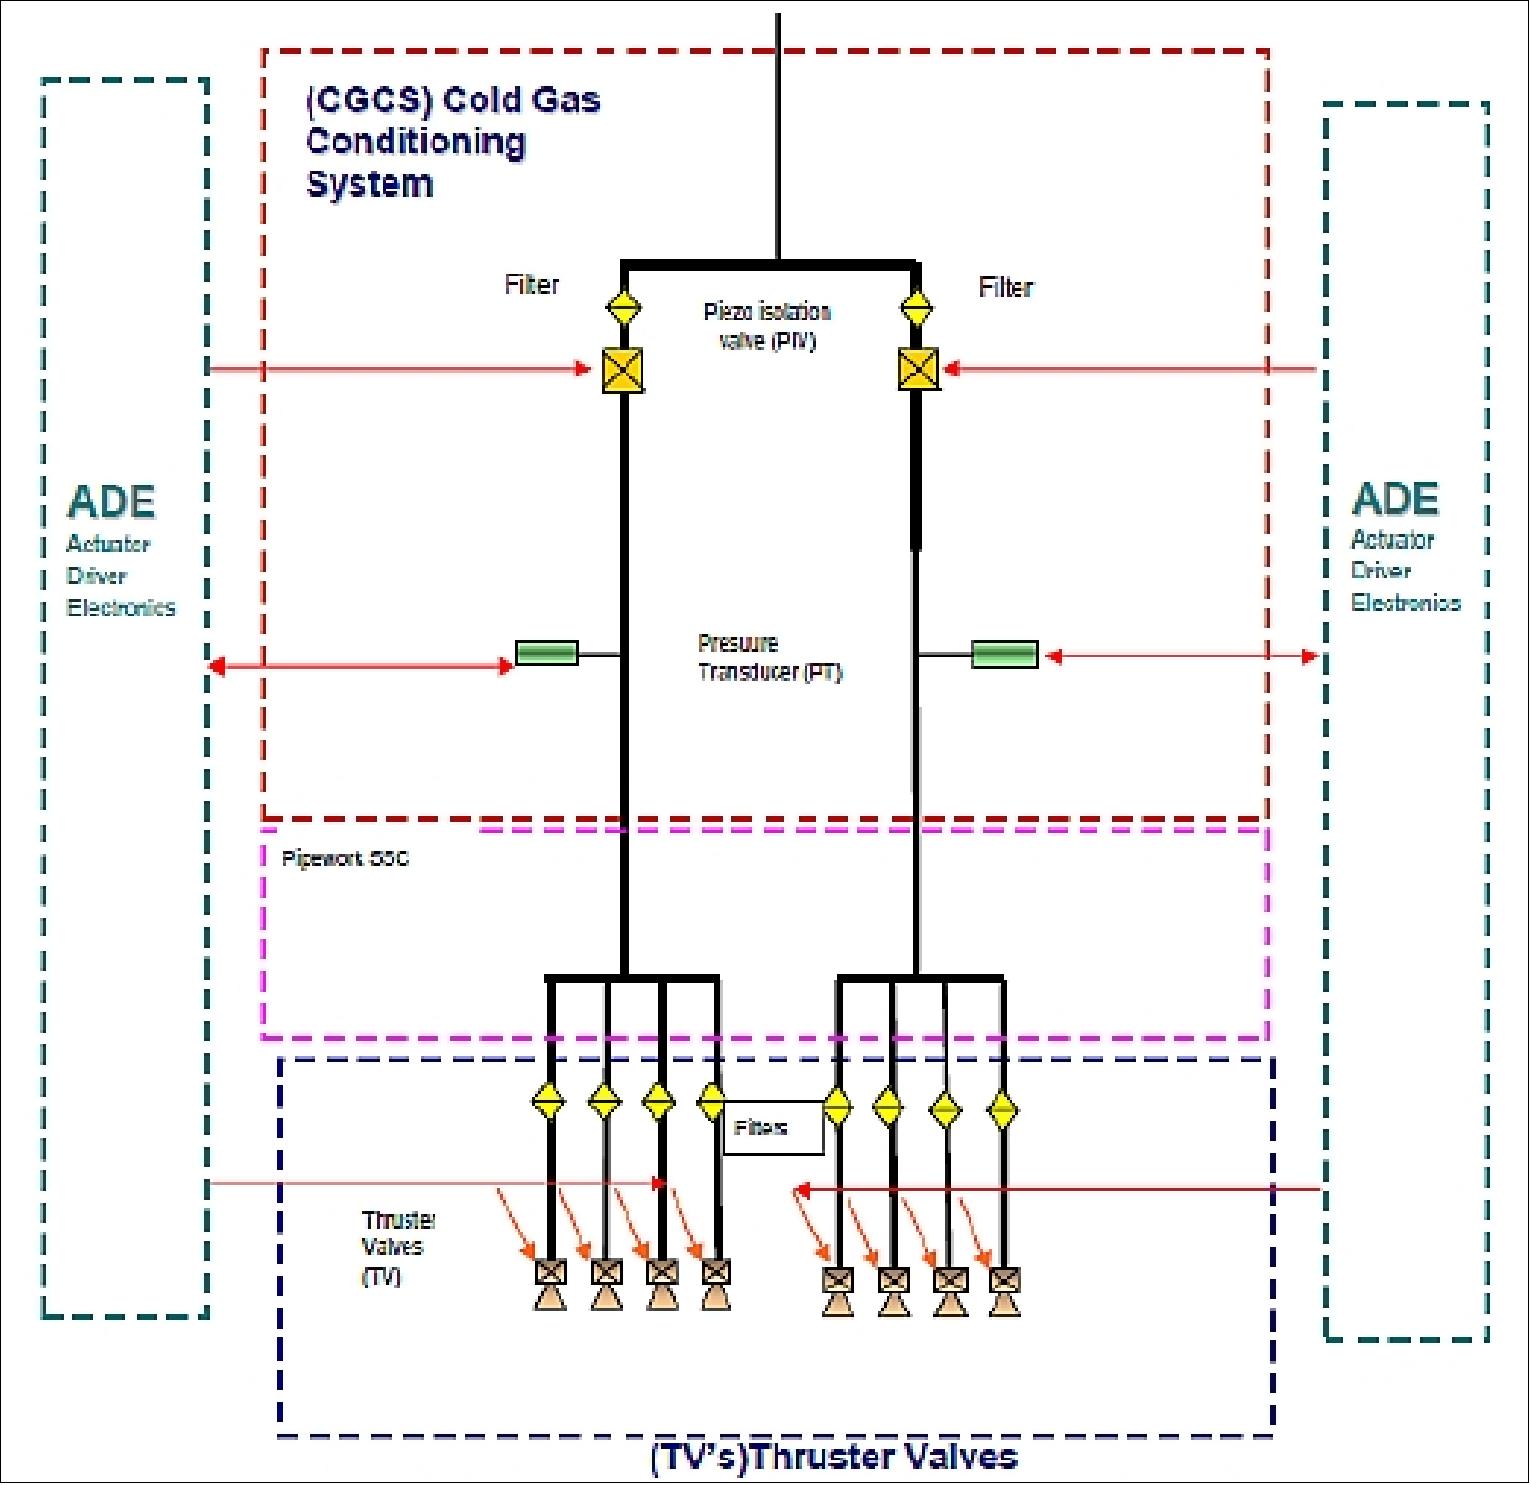 Figure 14: Overview of the CGTA architecture scheme (image credit: SGEO consortium)